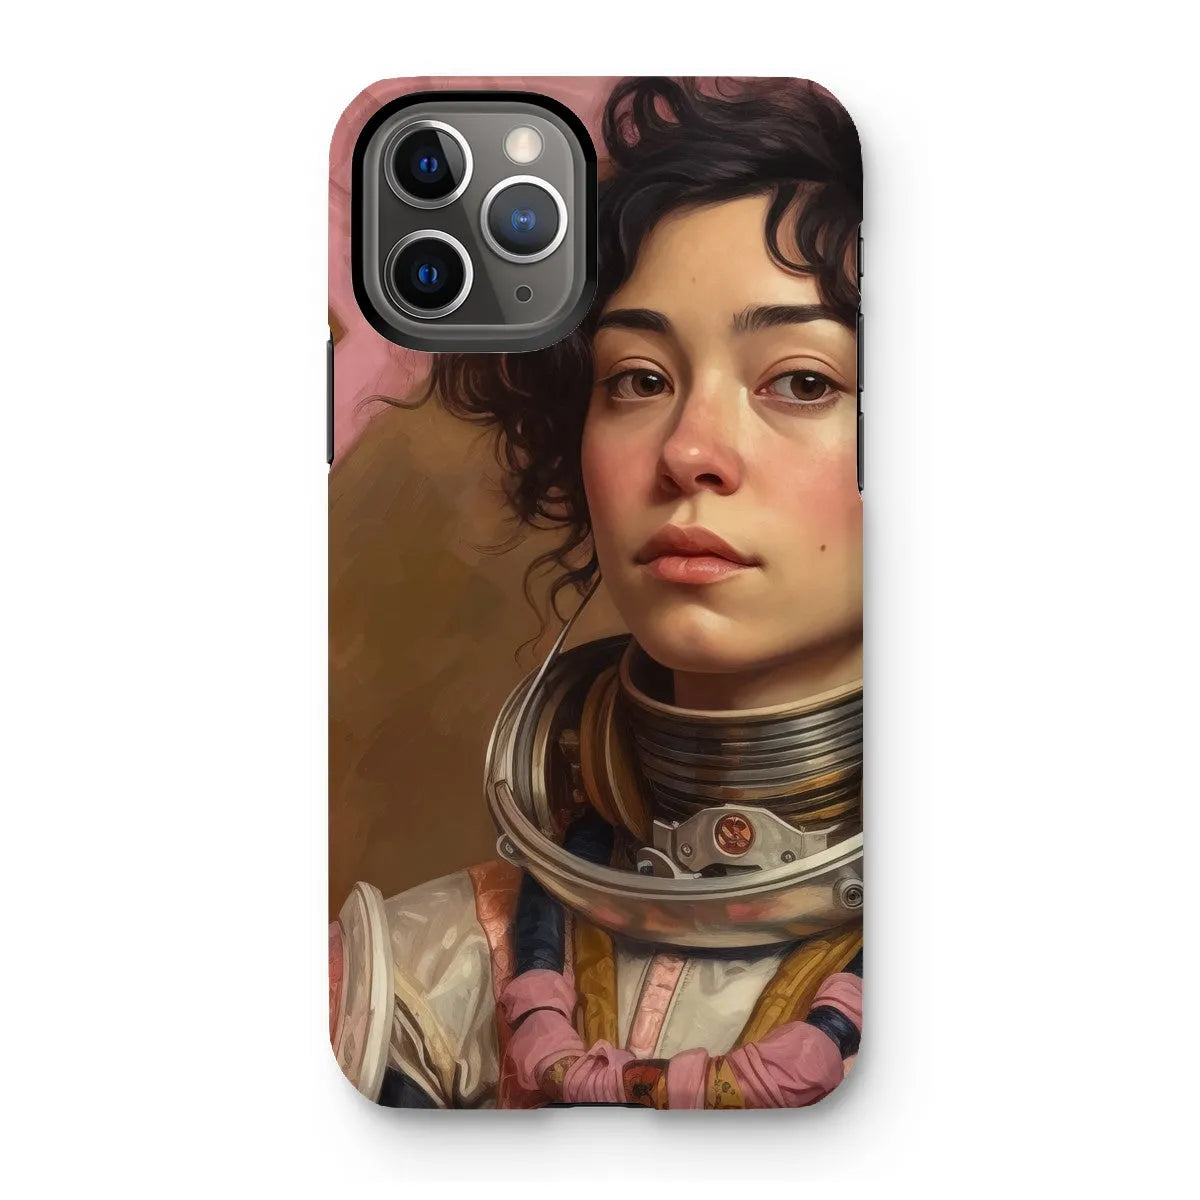 Faustina The Lesbian Astronaut - Lgbtq Art Phone Case - Iphone 11 Pro / Matte - Mobile Phone Cases - Aesthetic Art